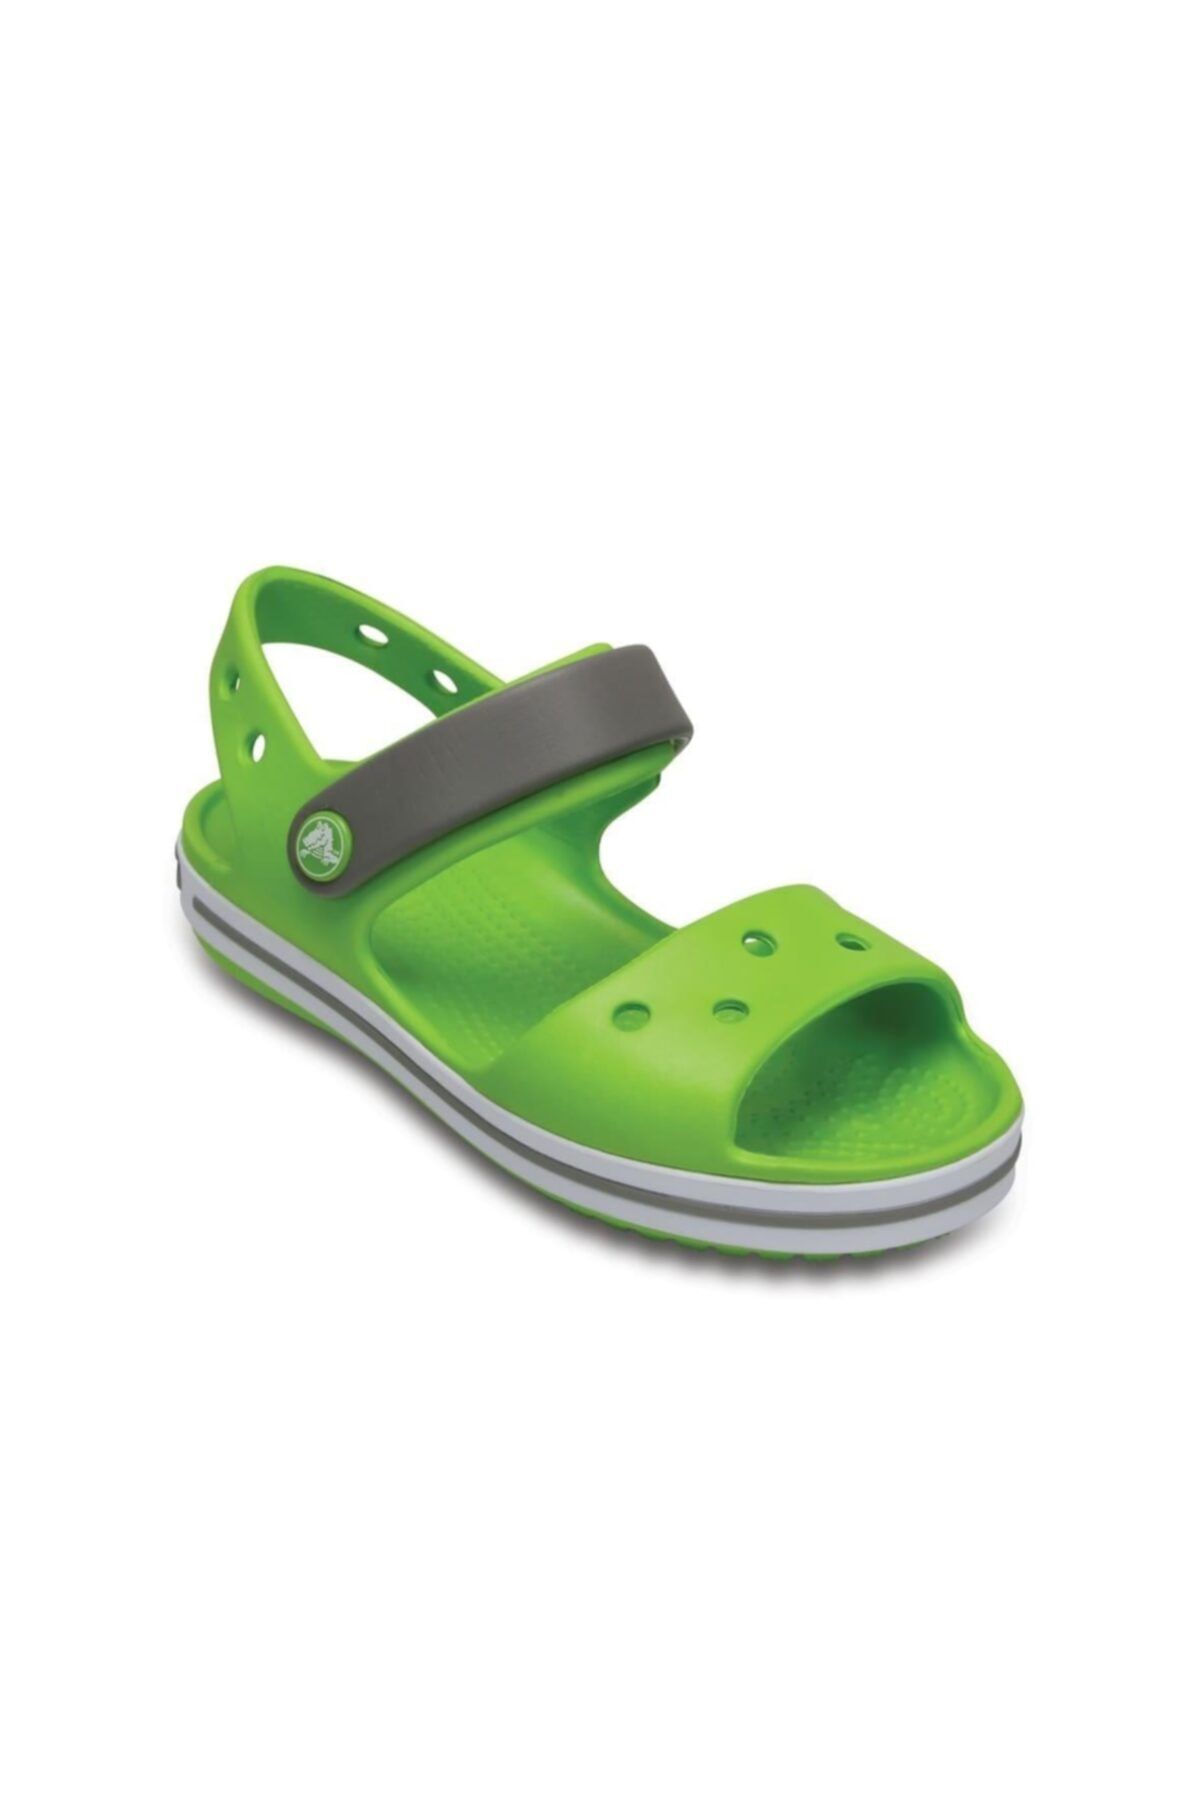 Crocs Crocband Sandal Kids Çocuk Sandalet - Yeşil